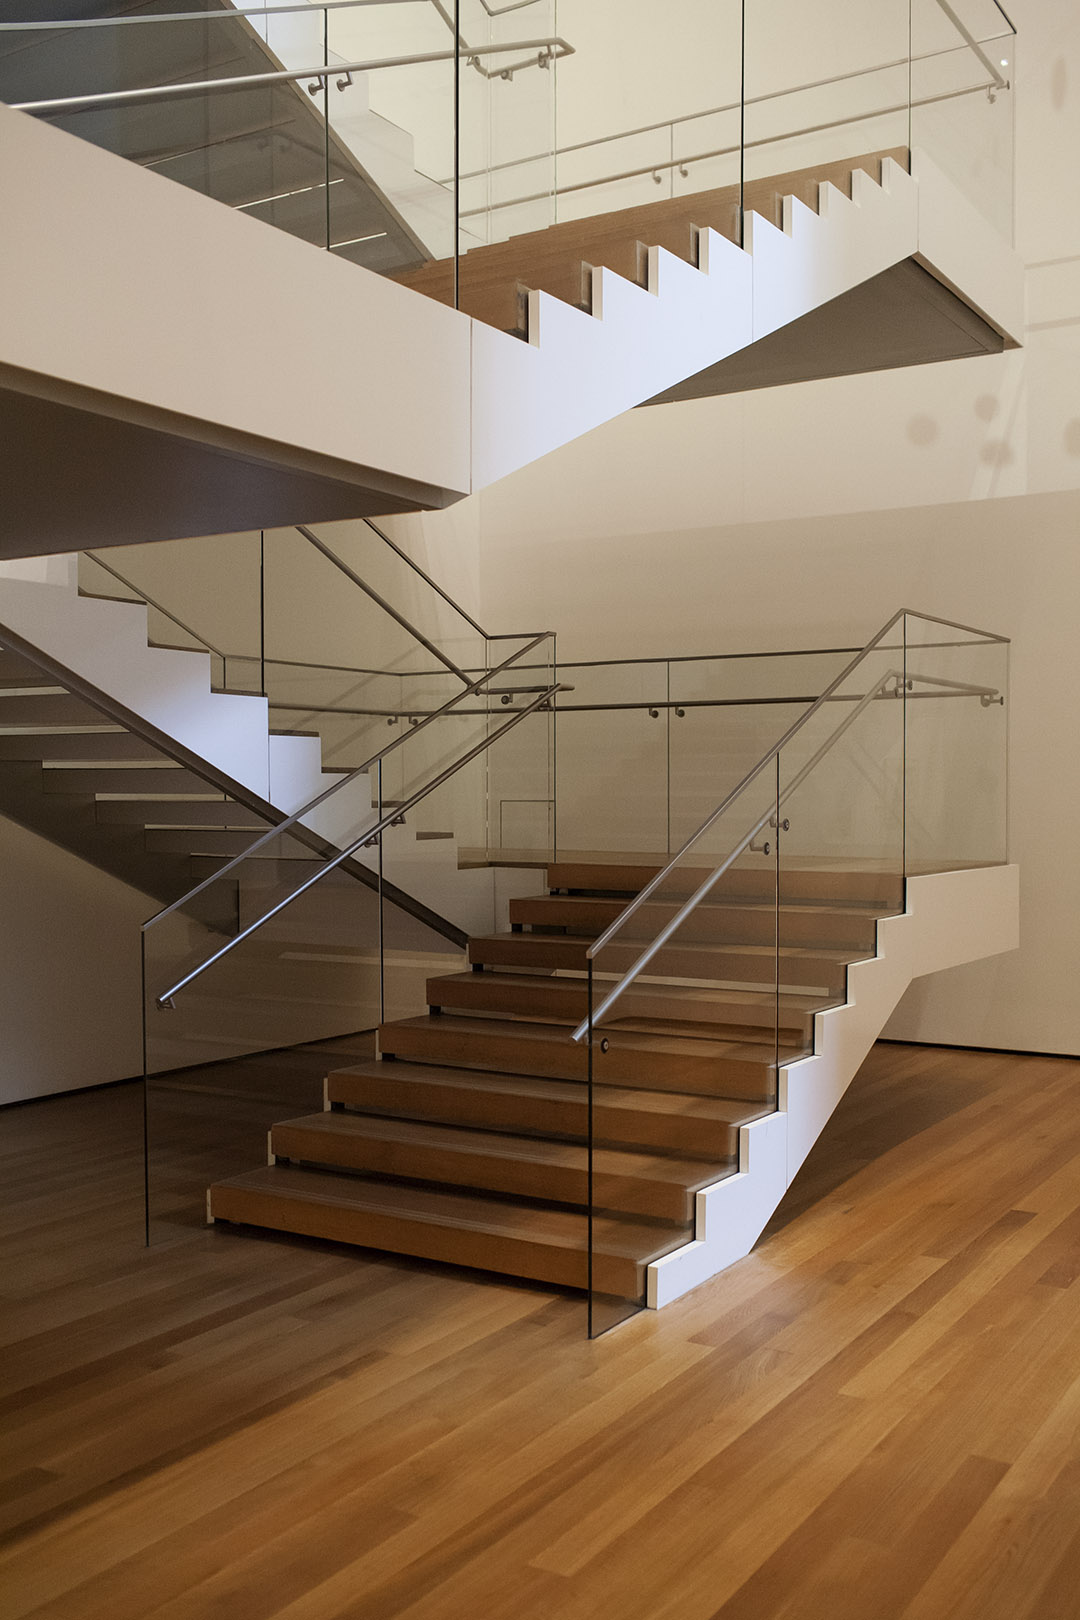 _nf - New York MoMA interior stairs